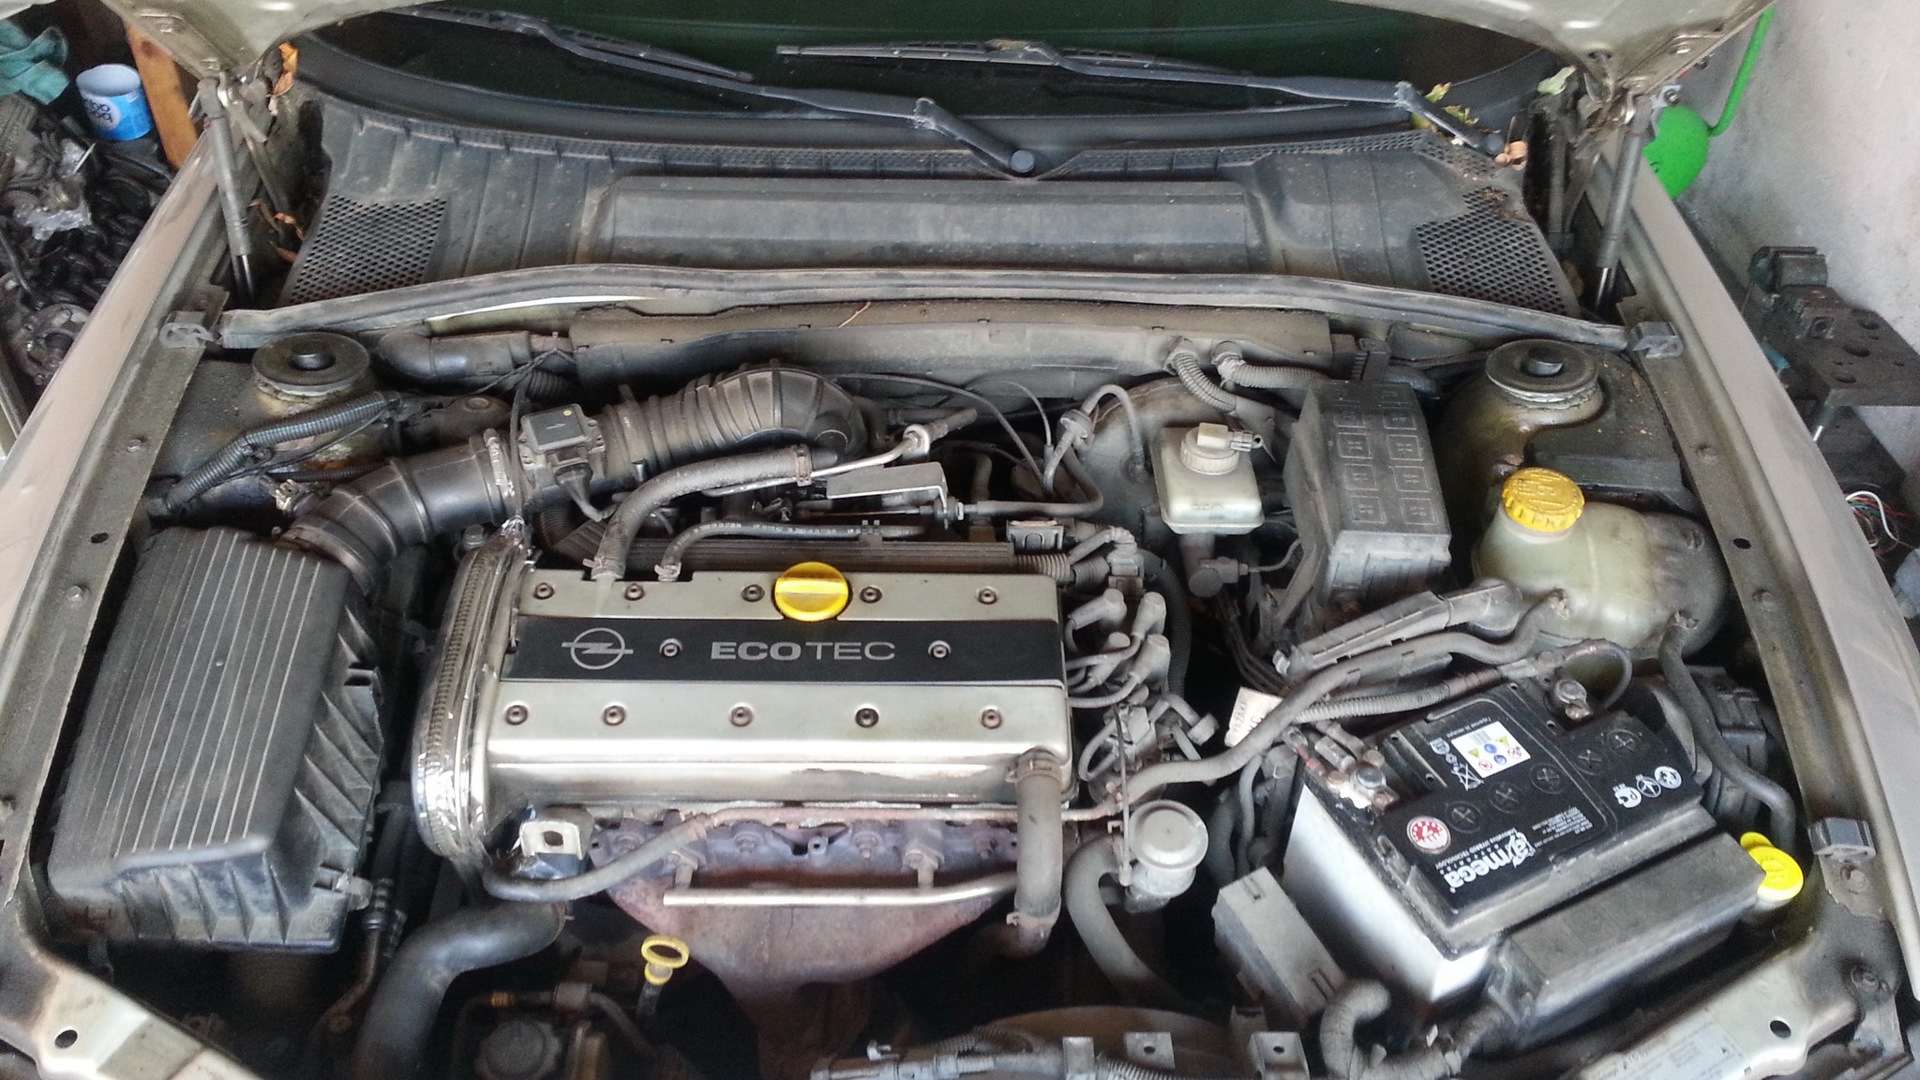 Мотор Opel Vectra b 1.8 x18xe 1. Двигатель Опель Вектра б 1.8 x18xe. Опель Вектра б x18xe. Opel Vectra b двигатель 1.8. X18xe1 вектра б